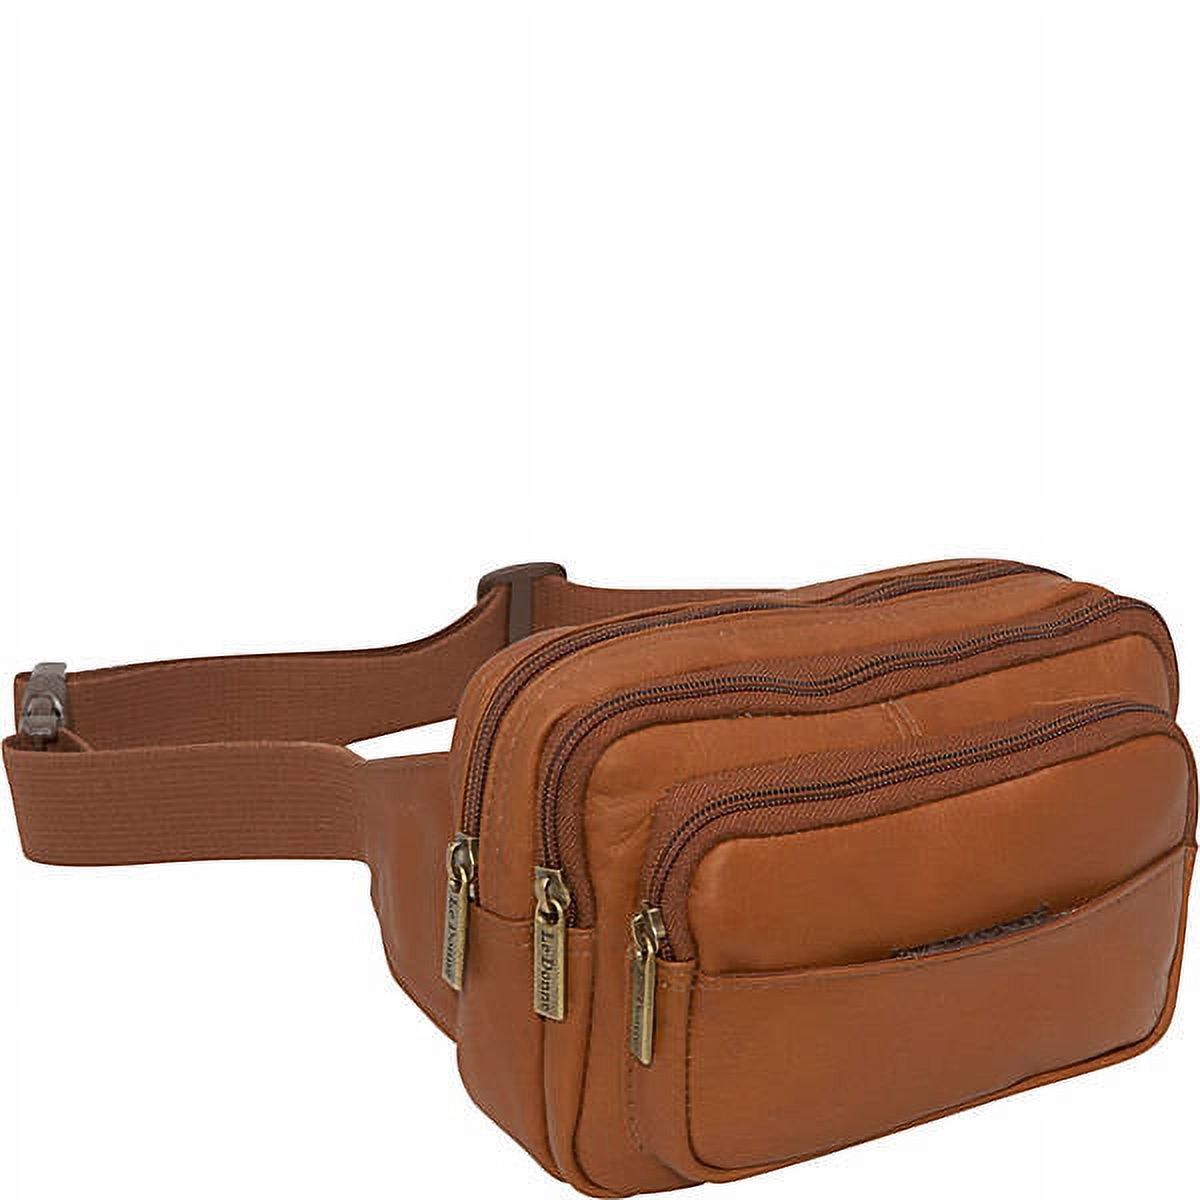 Le Donne Leather Four Compartment Waist Bag LD-9114 - image 1 of 2